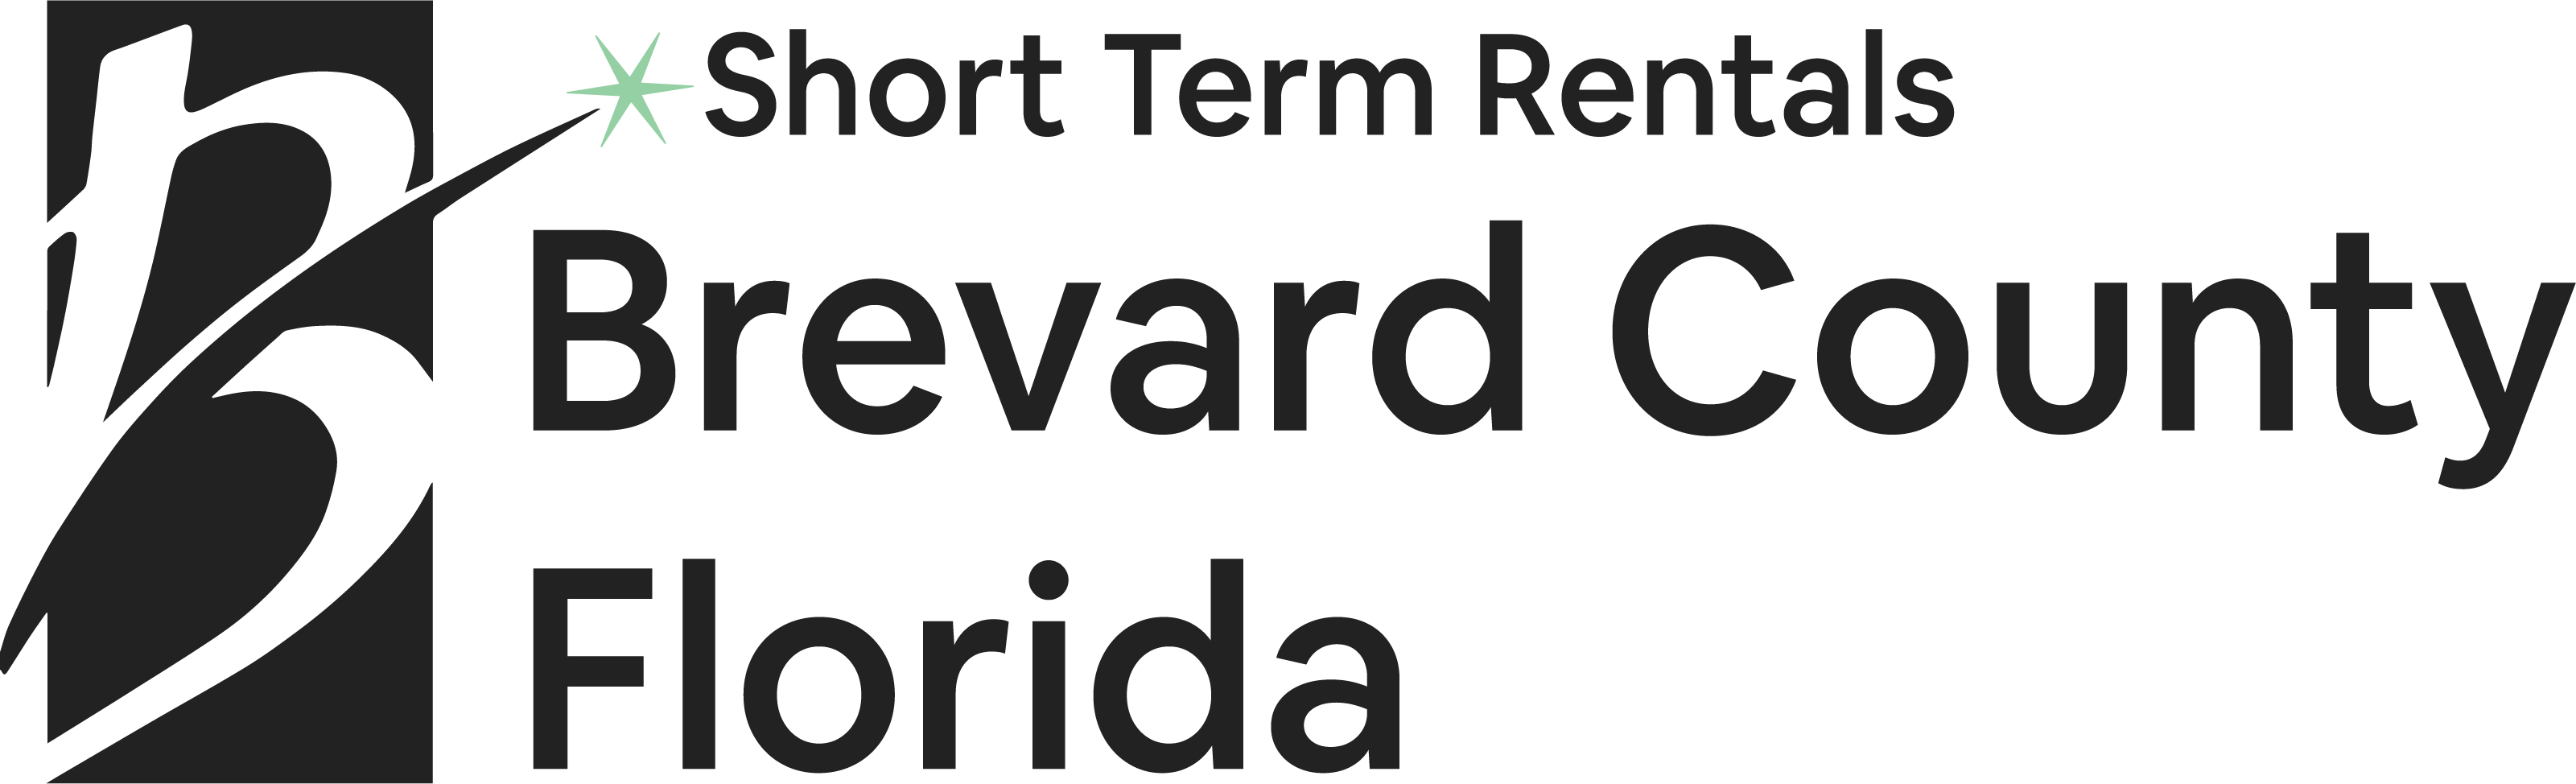 Brevard County Short Term Rentals